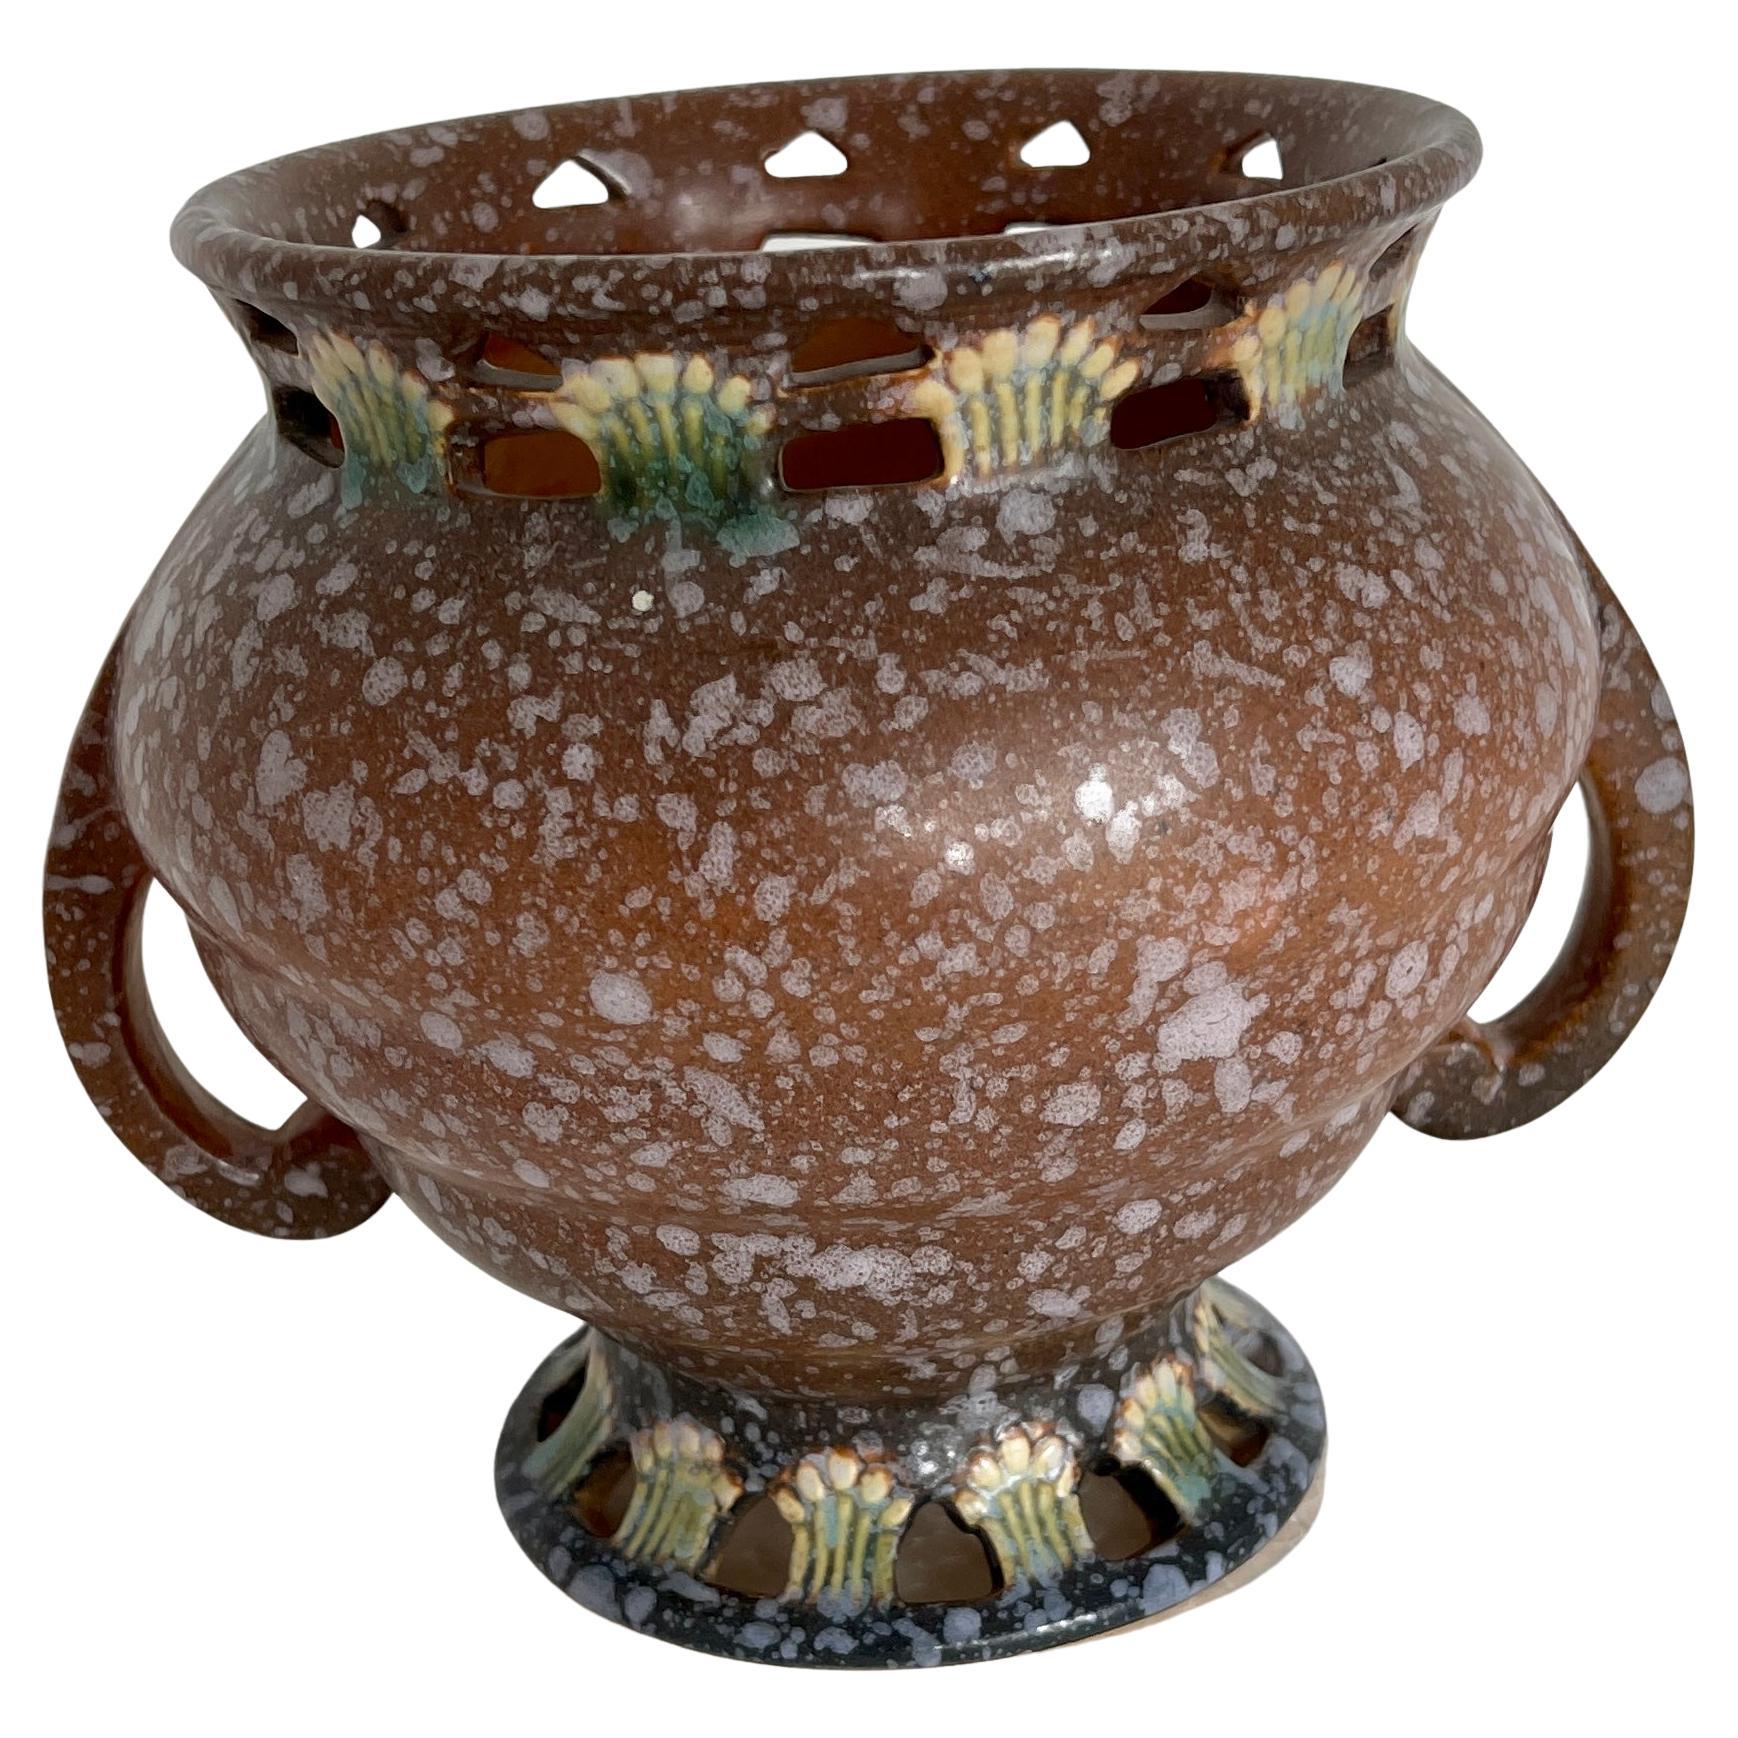 flawless condition Vintage Roseville pottery vase like-new Roseville vase, Dalrose pattern c.1930 6 1/2” tall marked Roseville